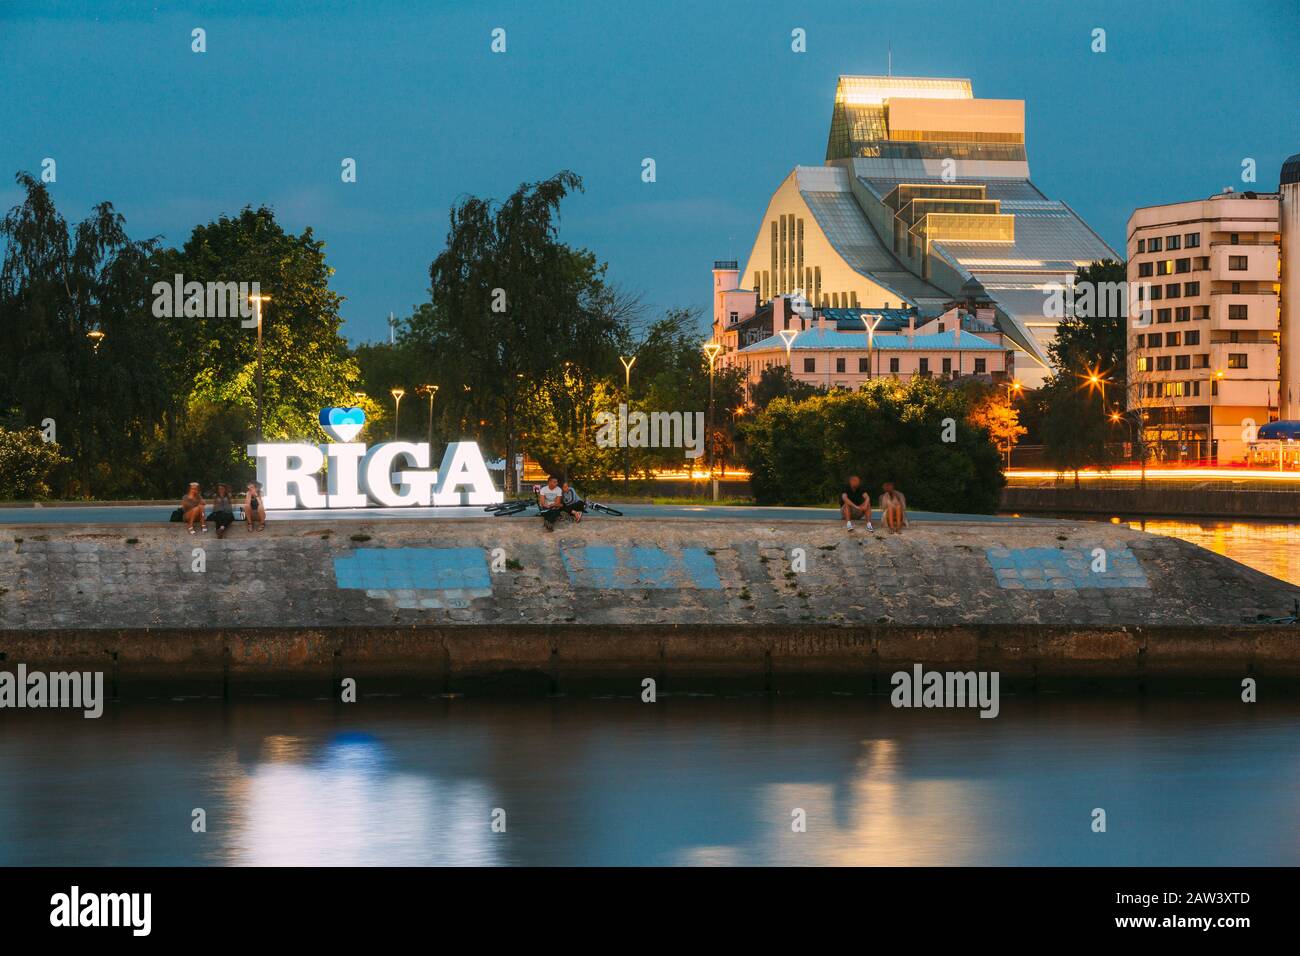 Riga, Latvia - June 30, 2016: Sitting People On Edge Of Urban Concrete Embankment Of Daugava River Around The Glowing City Name Sign In Summer Evening Stock Photo